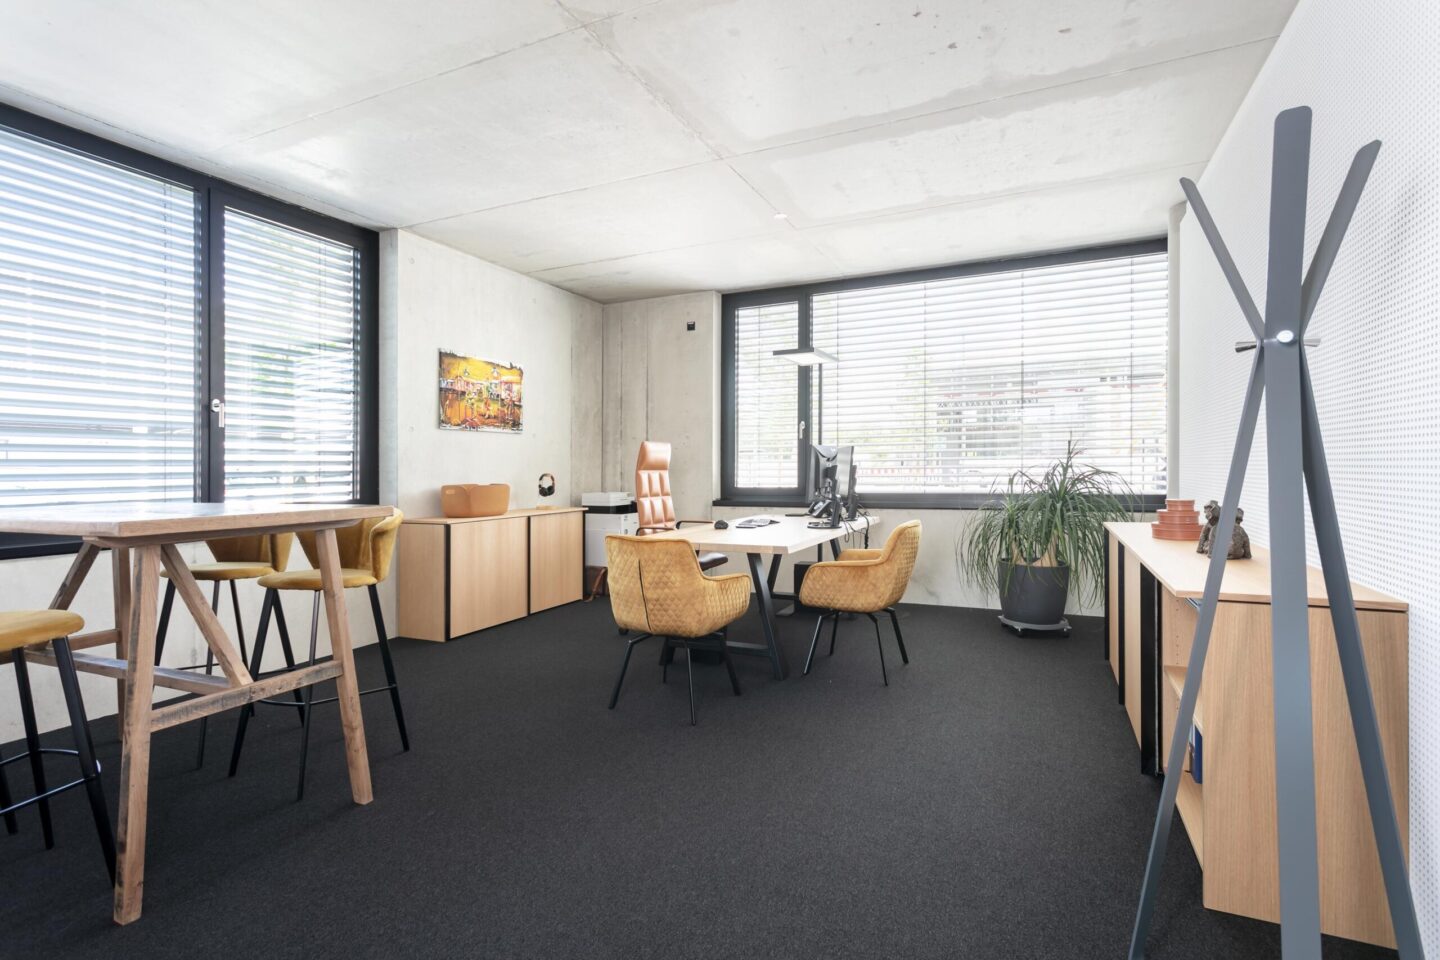 BSHR Tax Consultants Ettlingen │ modern Scandinavian style furniture │ conference room